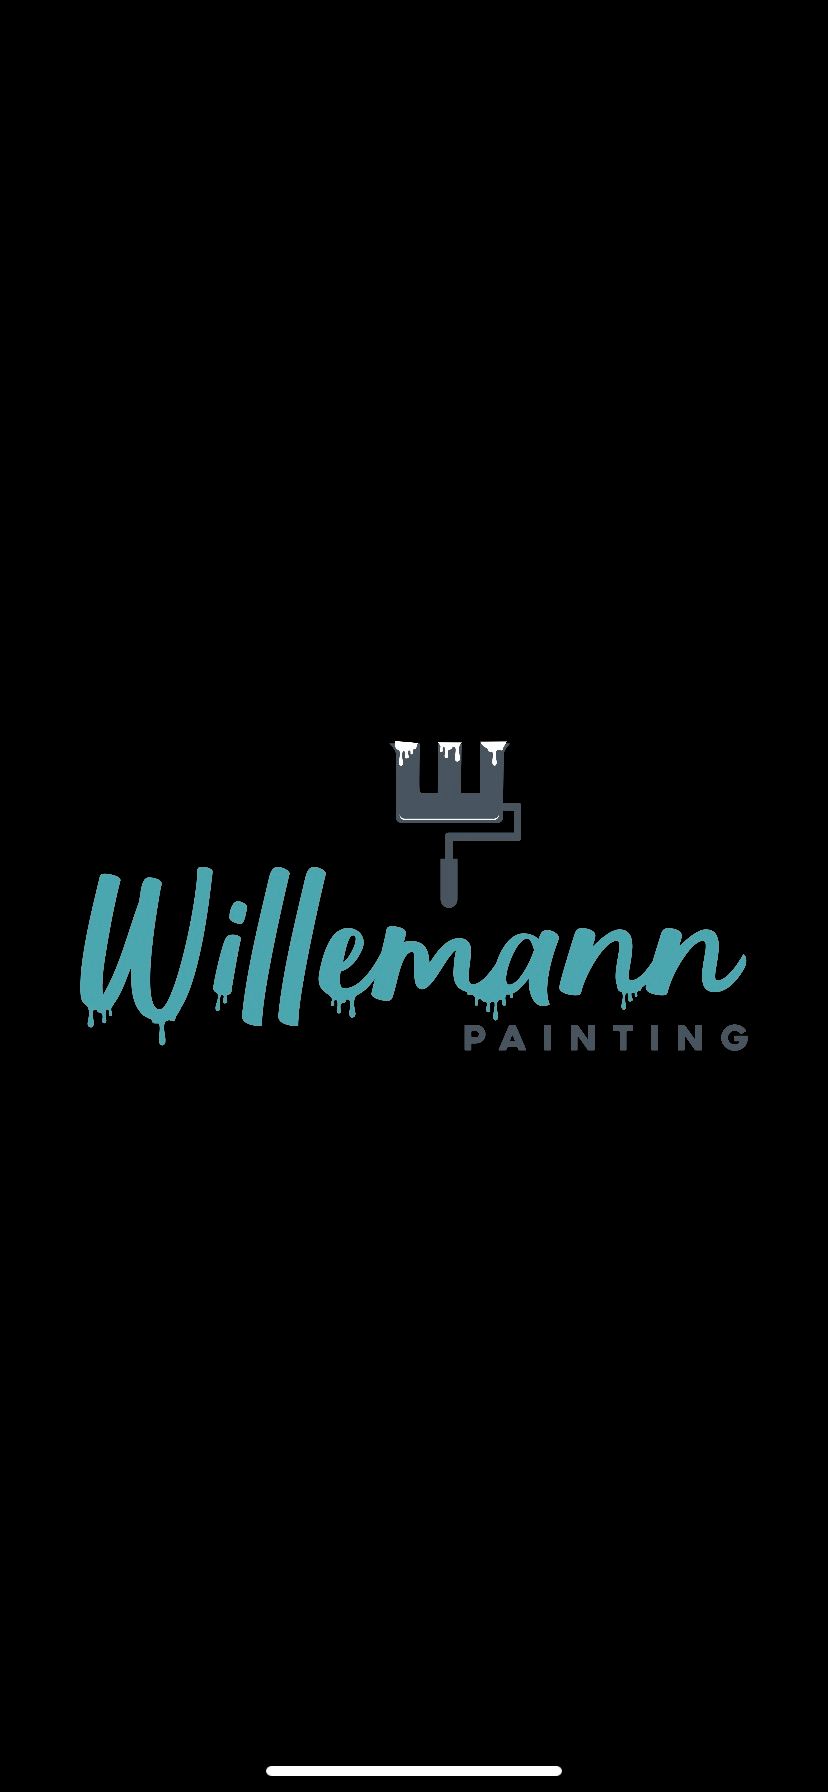 Willemann painting LLC